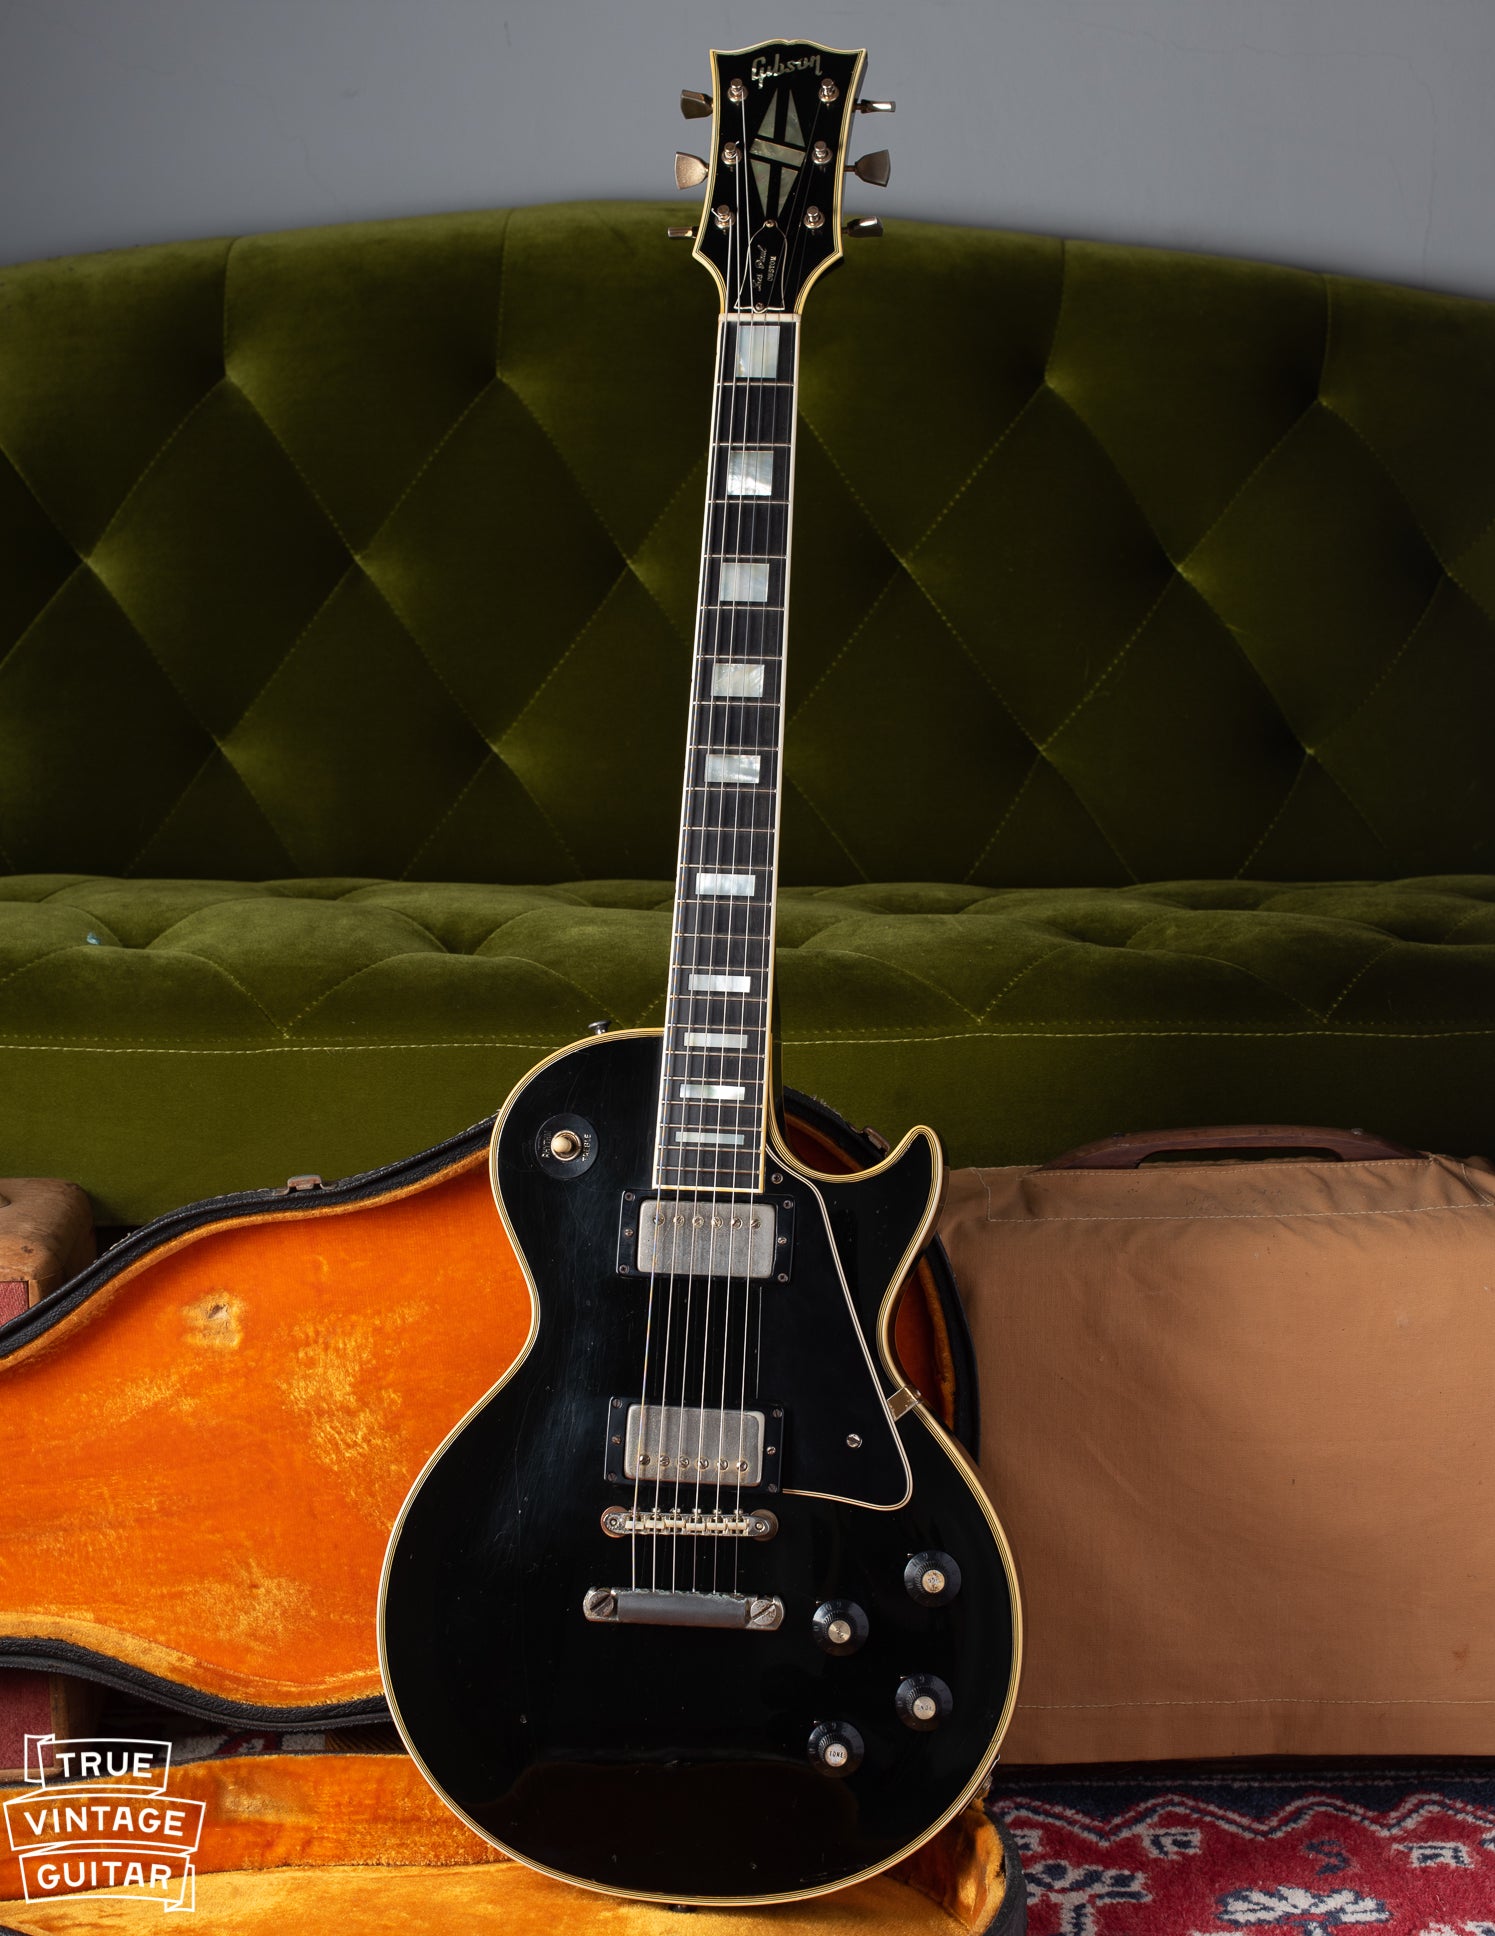 1969 Gibson Les Paul Custom guitar black with yellow interior case. 